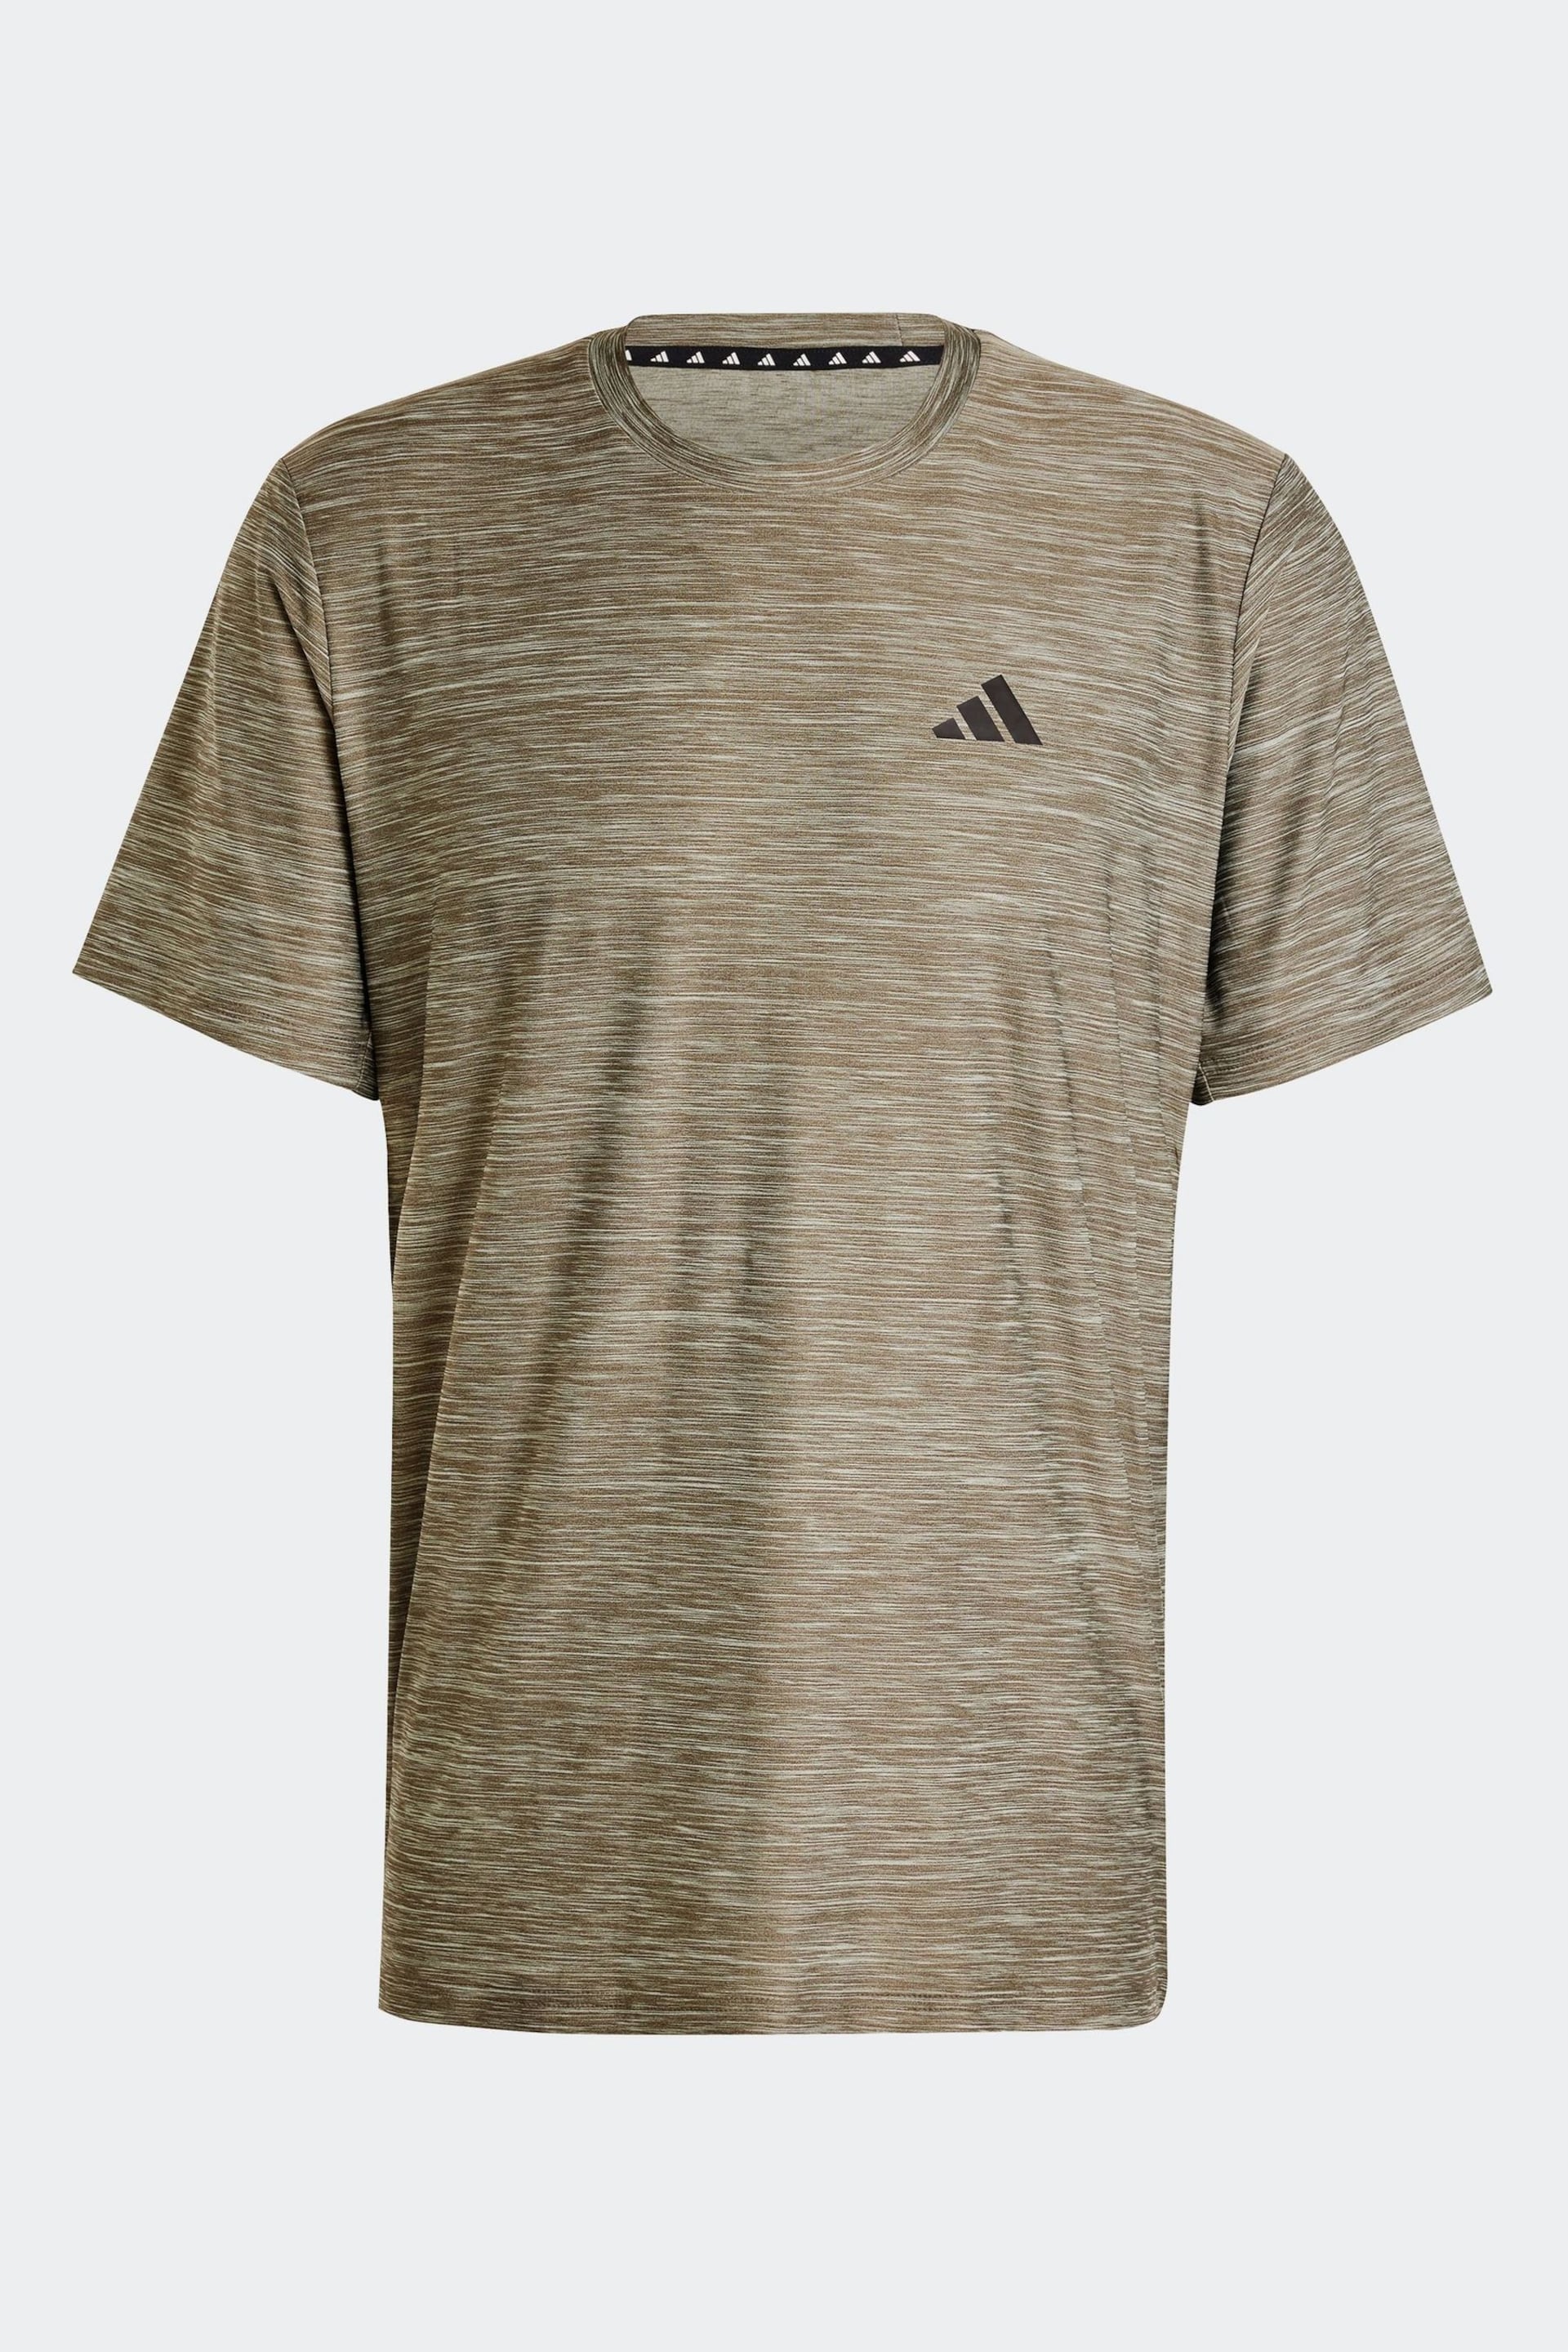 adidas Green Train Essentials Stretch Training T-Shirt - Image 7 of 7